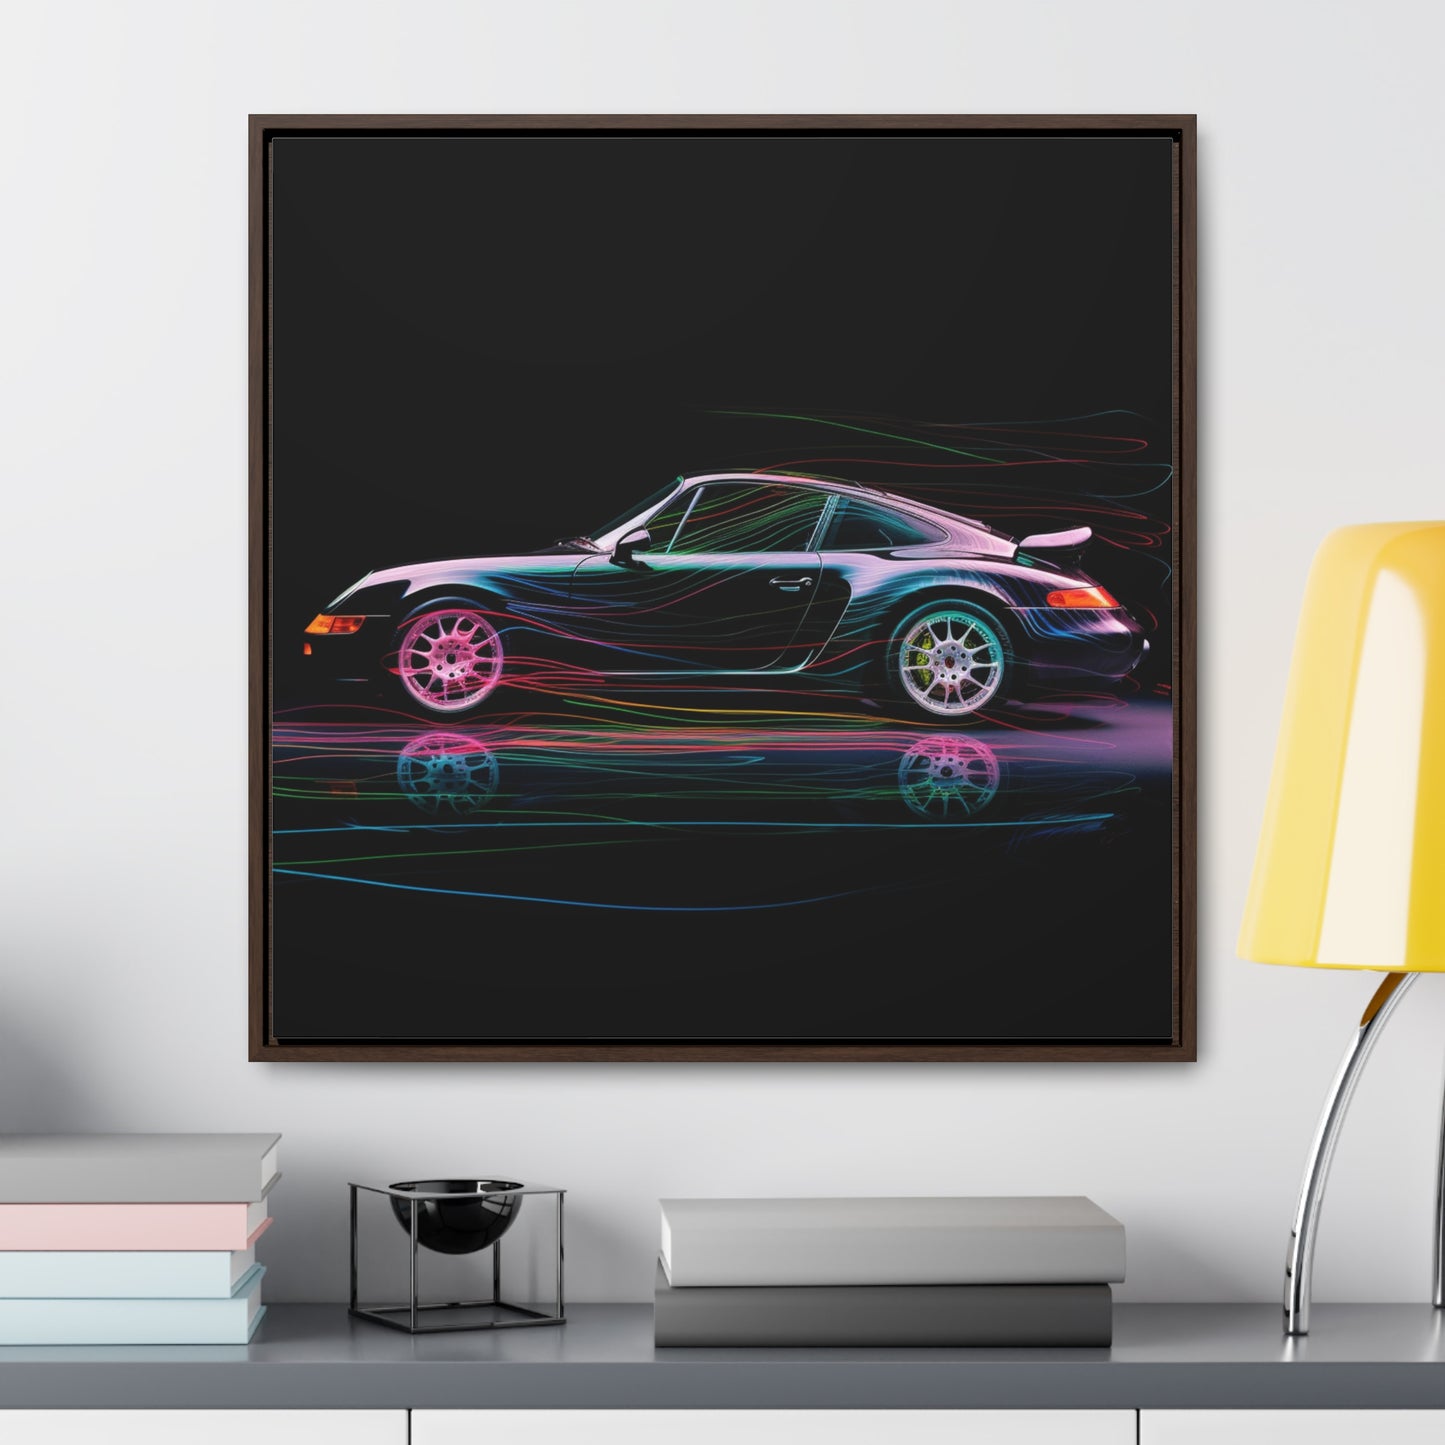 Gallery Canvas Wraps, Square Frame Porsche 933 1